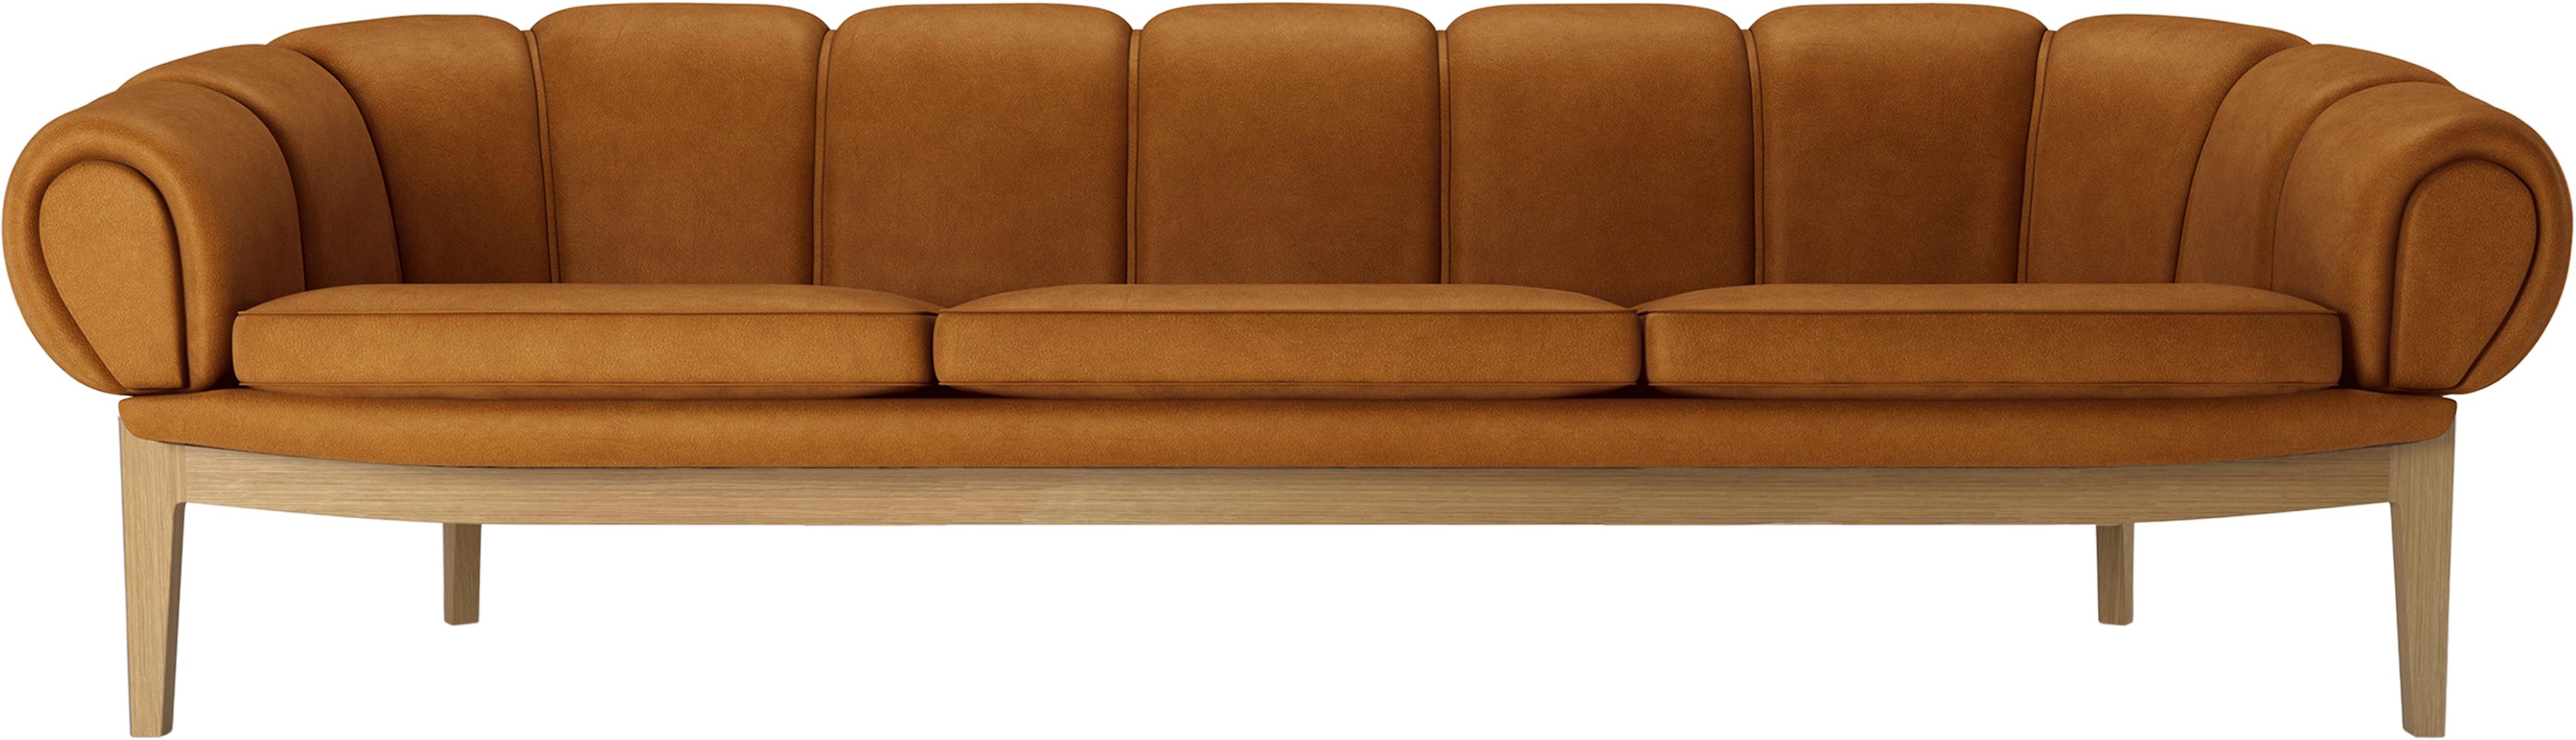 Danish Leather 'Croissant' Sofa by Illum Wikkelsø for Gubi with Oak Legs For Sale